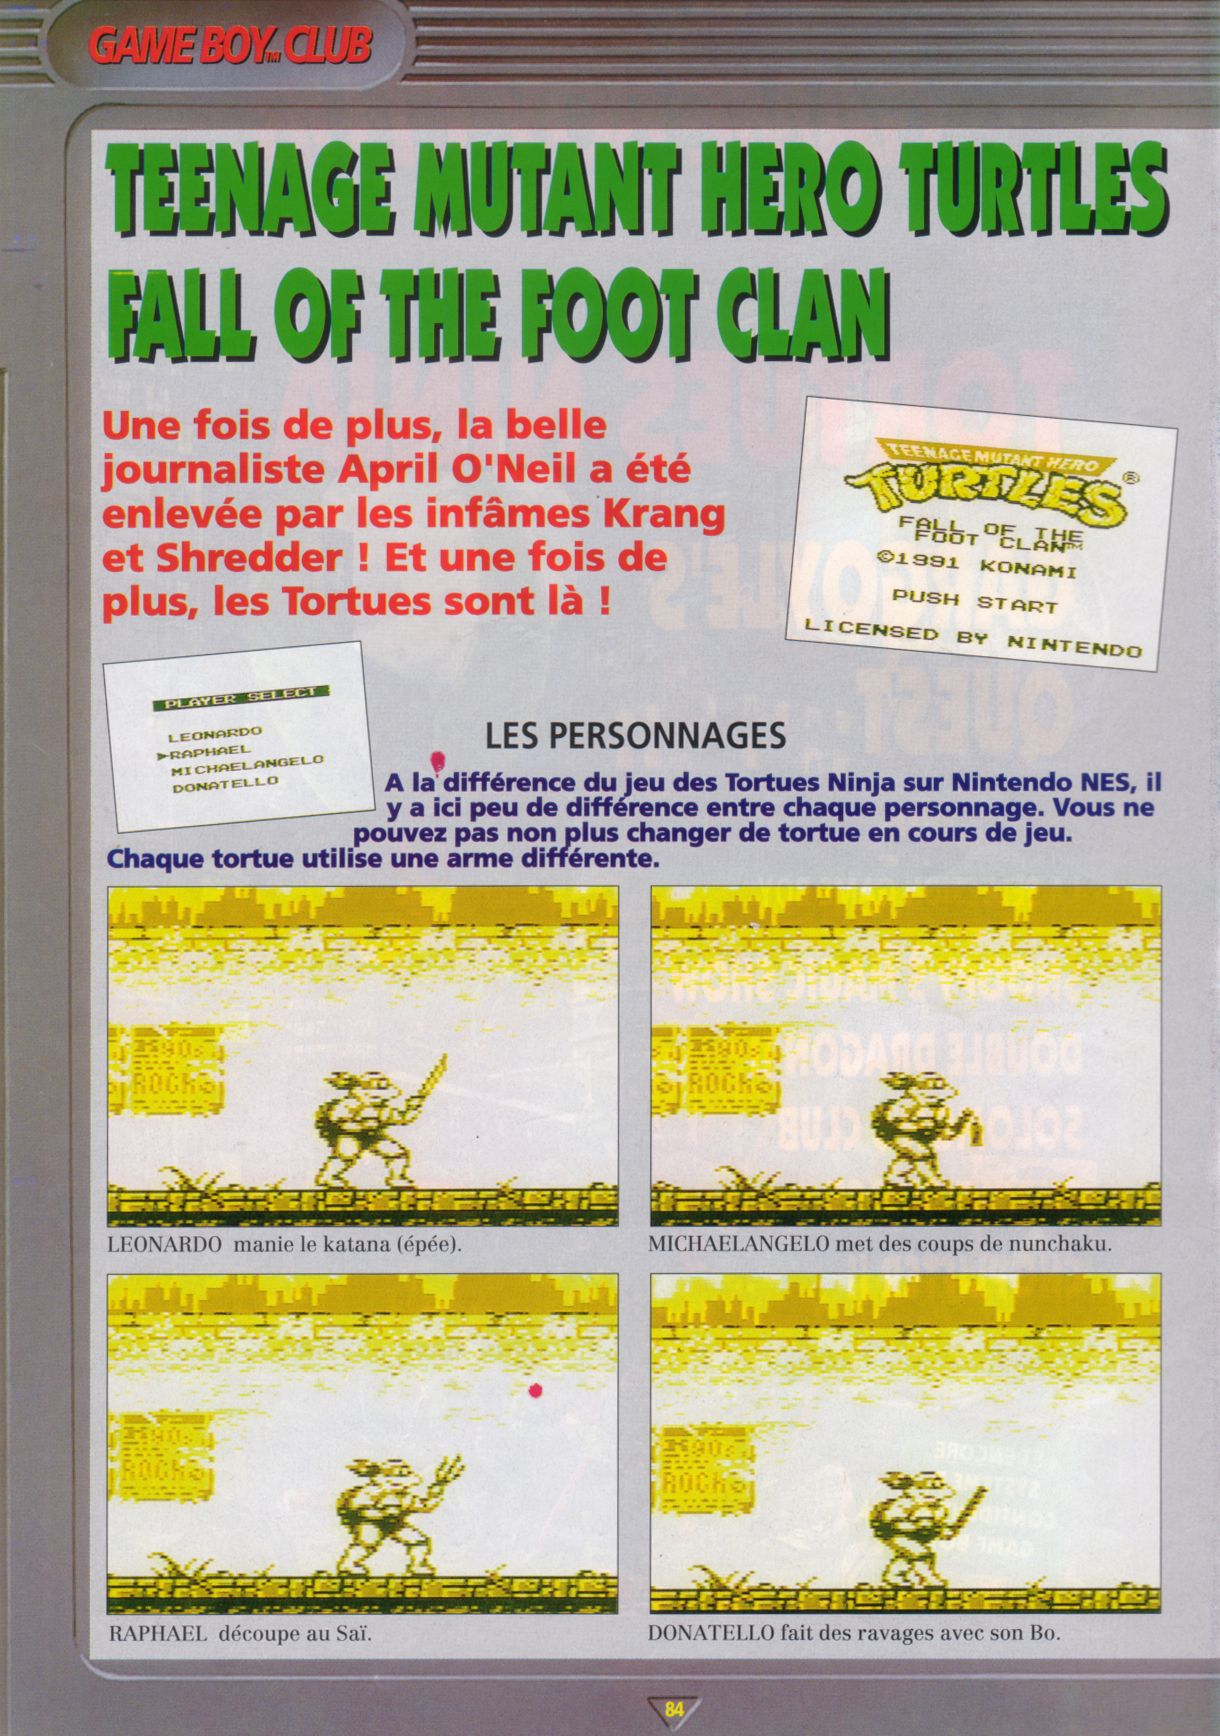 tests//1052/Nintendo Player 004 - Page 084 (1992-05-06).jpg